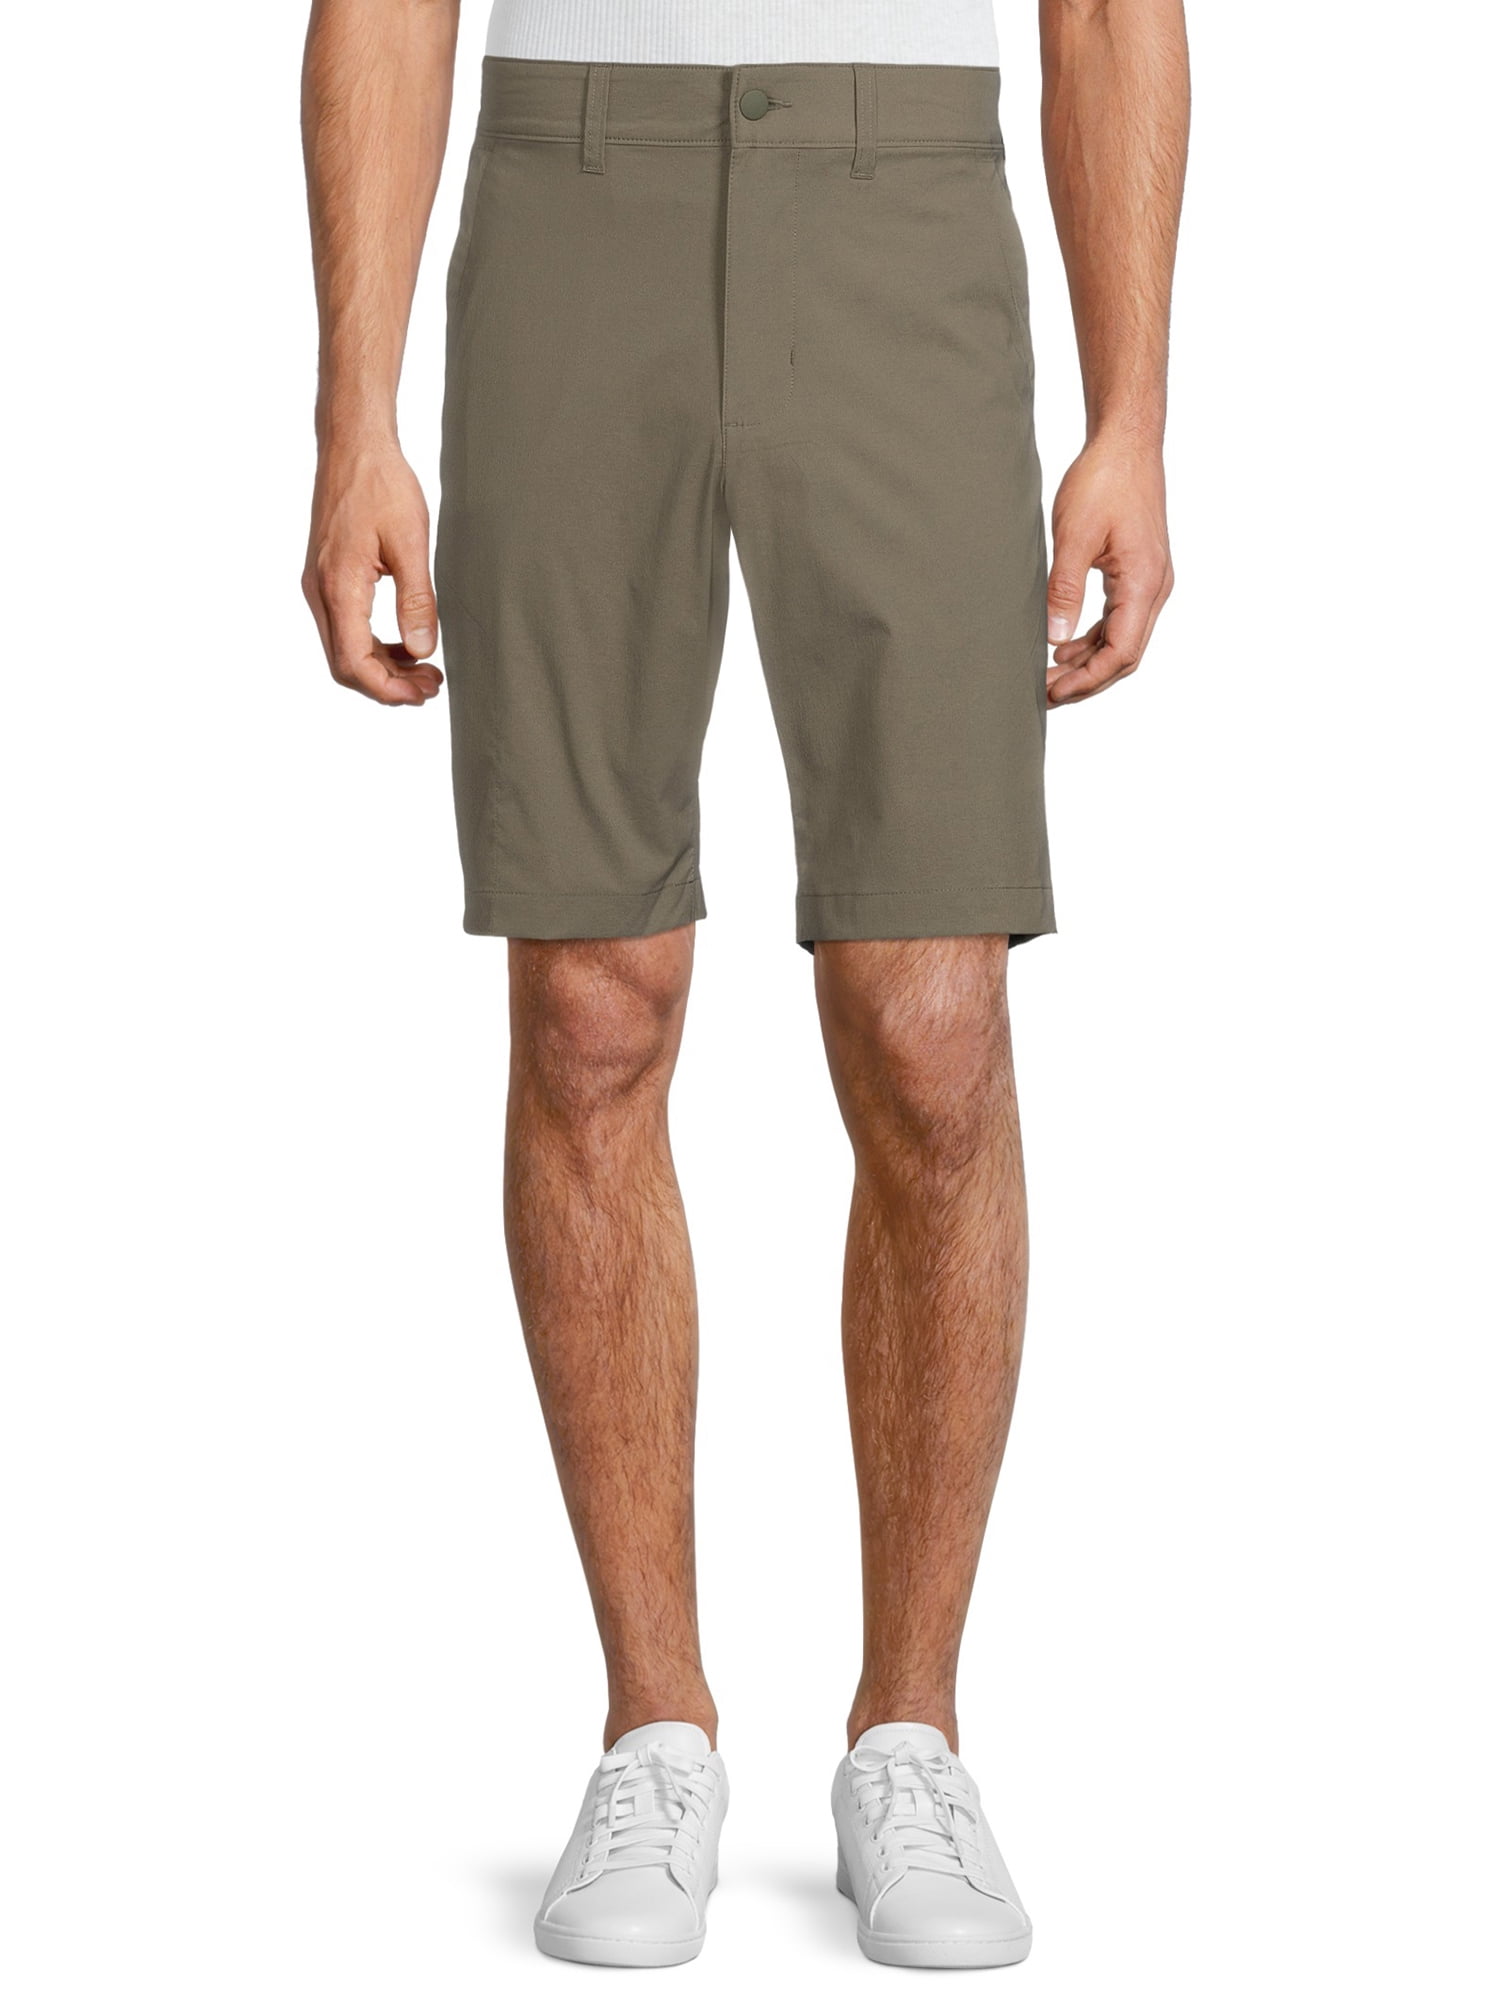 George Men’s Synthetic Utility Shorts - Walmart.com